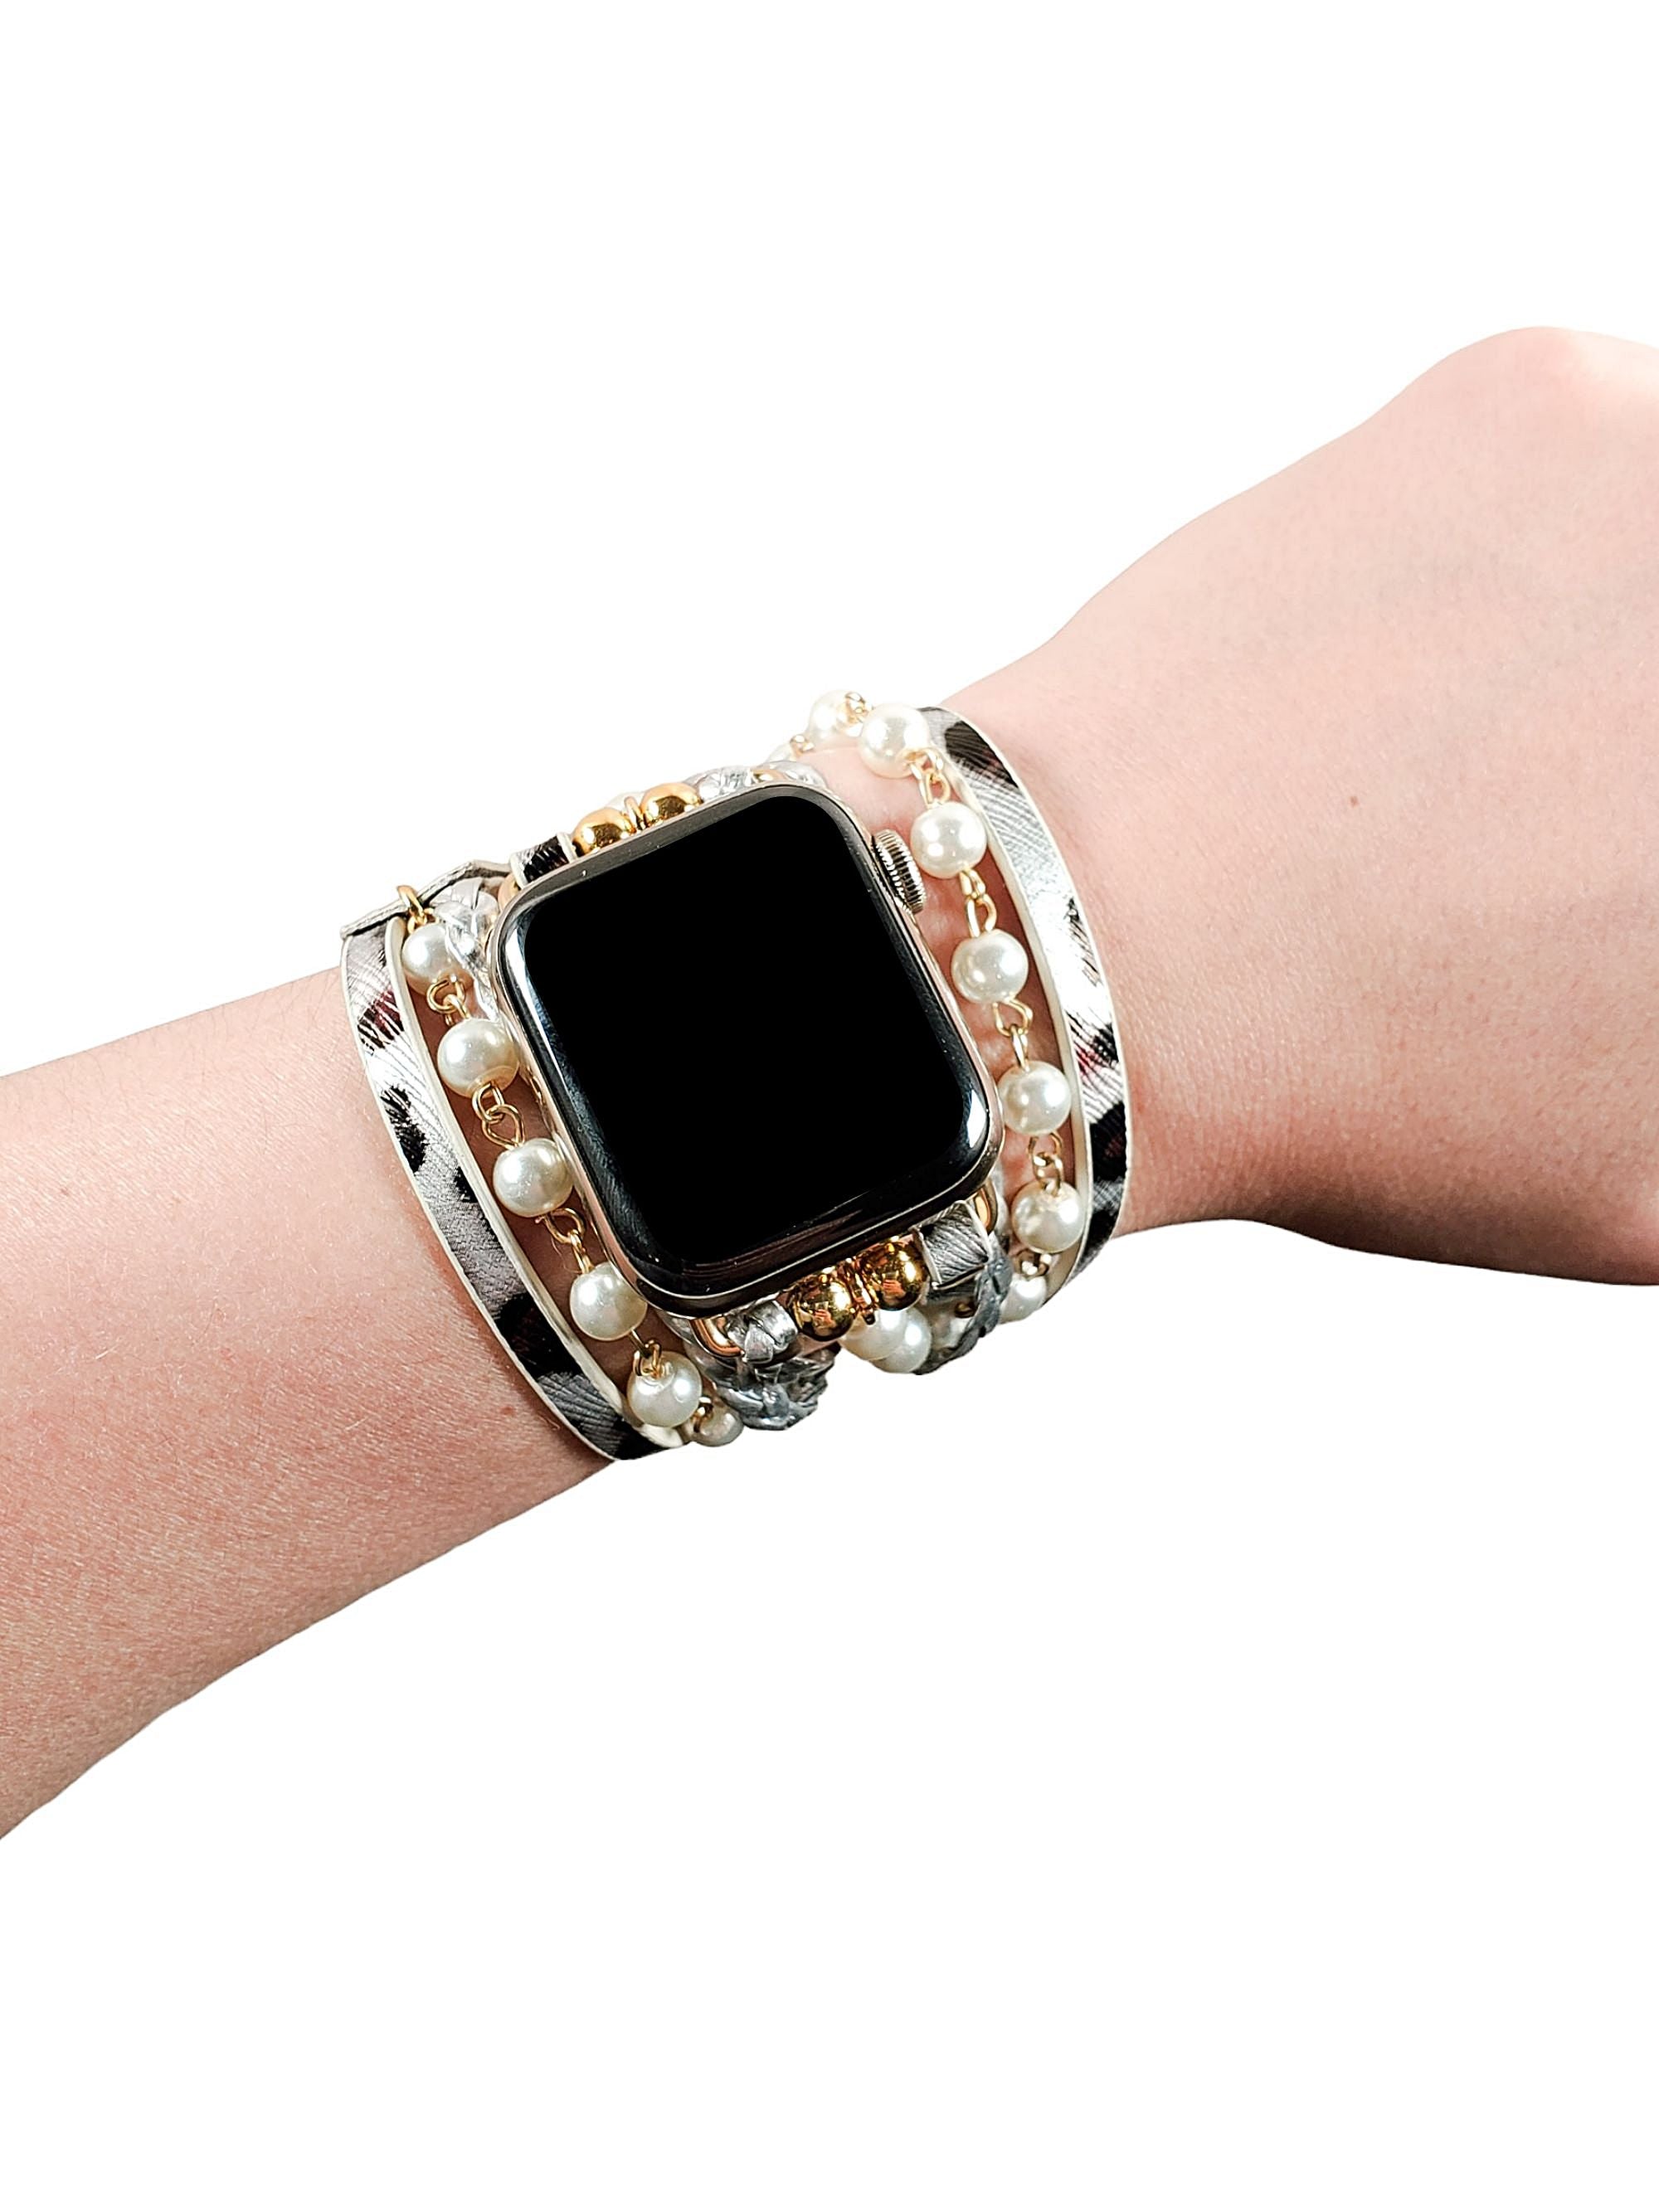  Fashion-forward, versatile wristwear, Apple Watch fashion